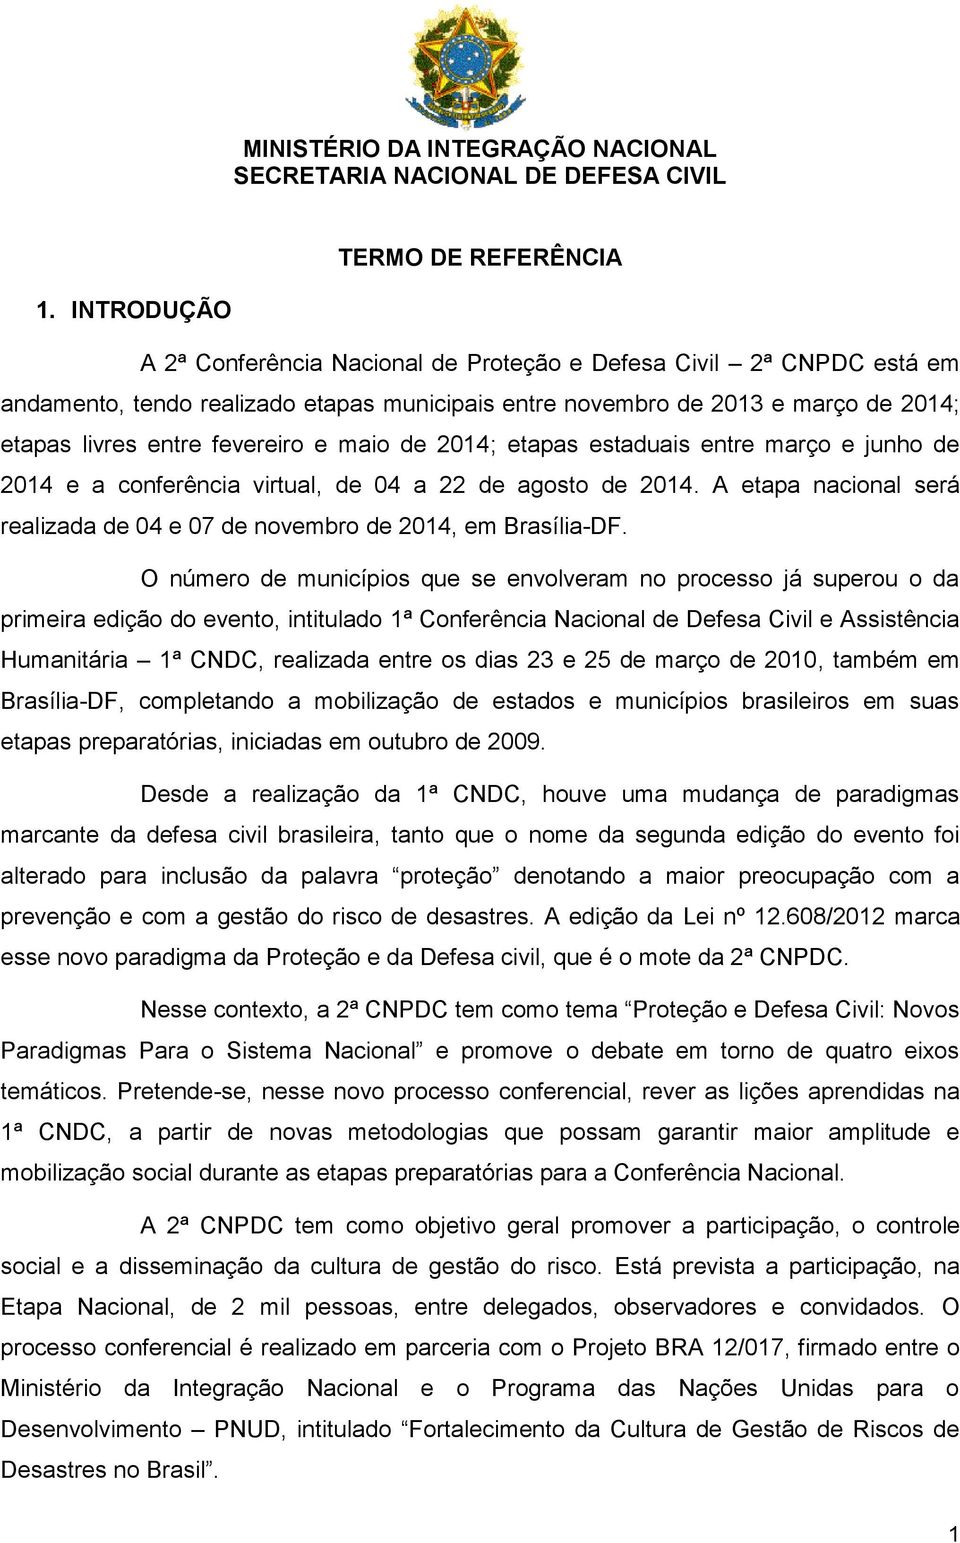 maio de 2014; etapas estaduais entre março e junho de 2014 e a conferência virtual, de 04 a 22 de agosto de 2014. A etapa nacional será realizada de 04 e 07 de novembro de 2014, em Brasília-DF.